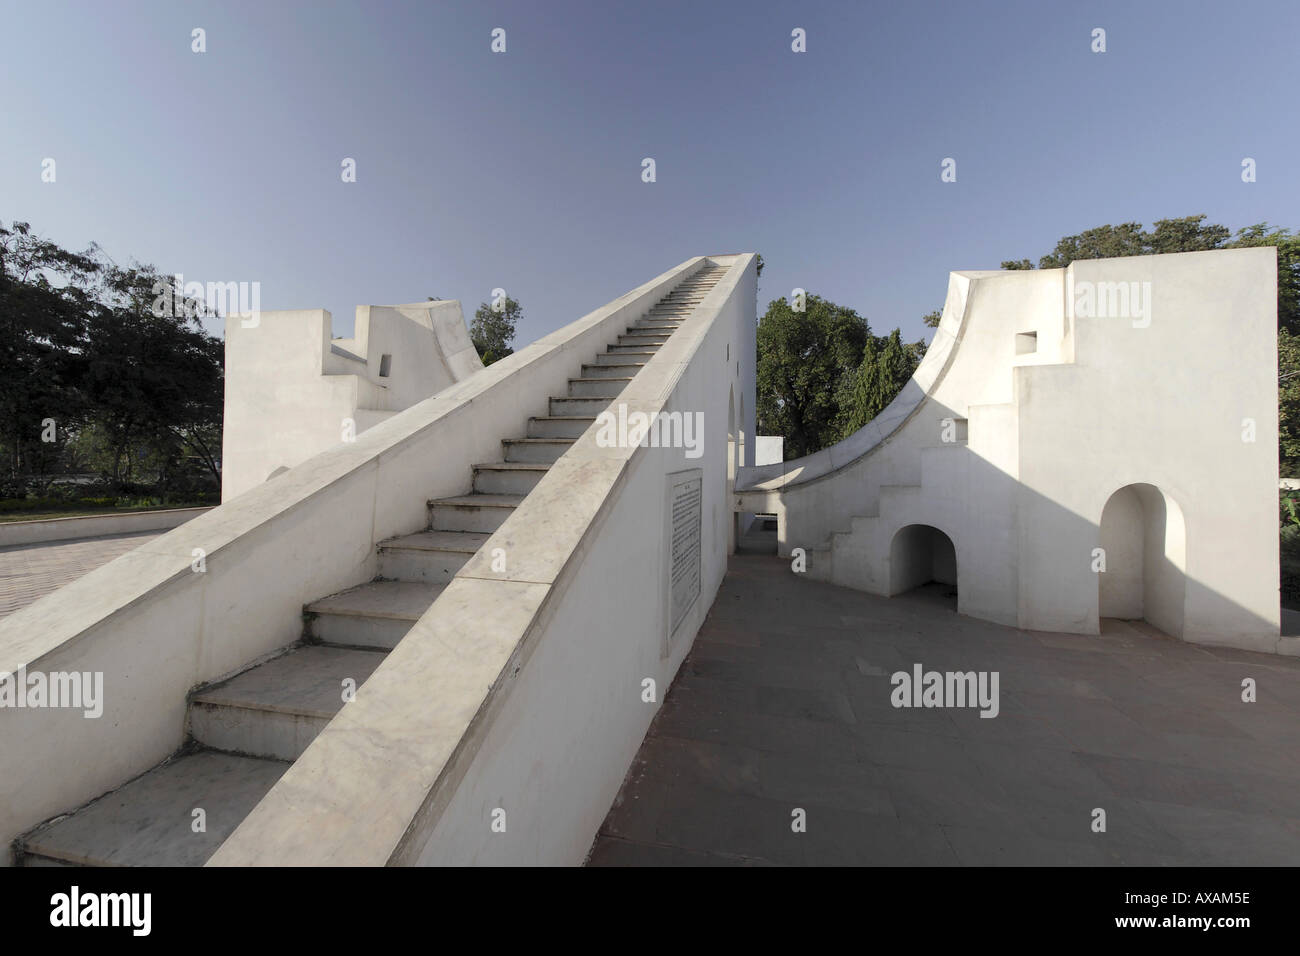 AAD73193 Jantar Mantar per Astronomian xviii secolo aperto Ujjain osservatorio di Madhya Pradesh India Foto Stock